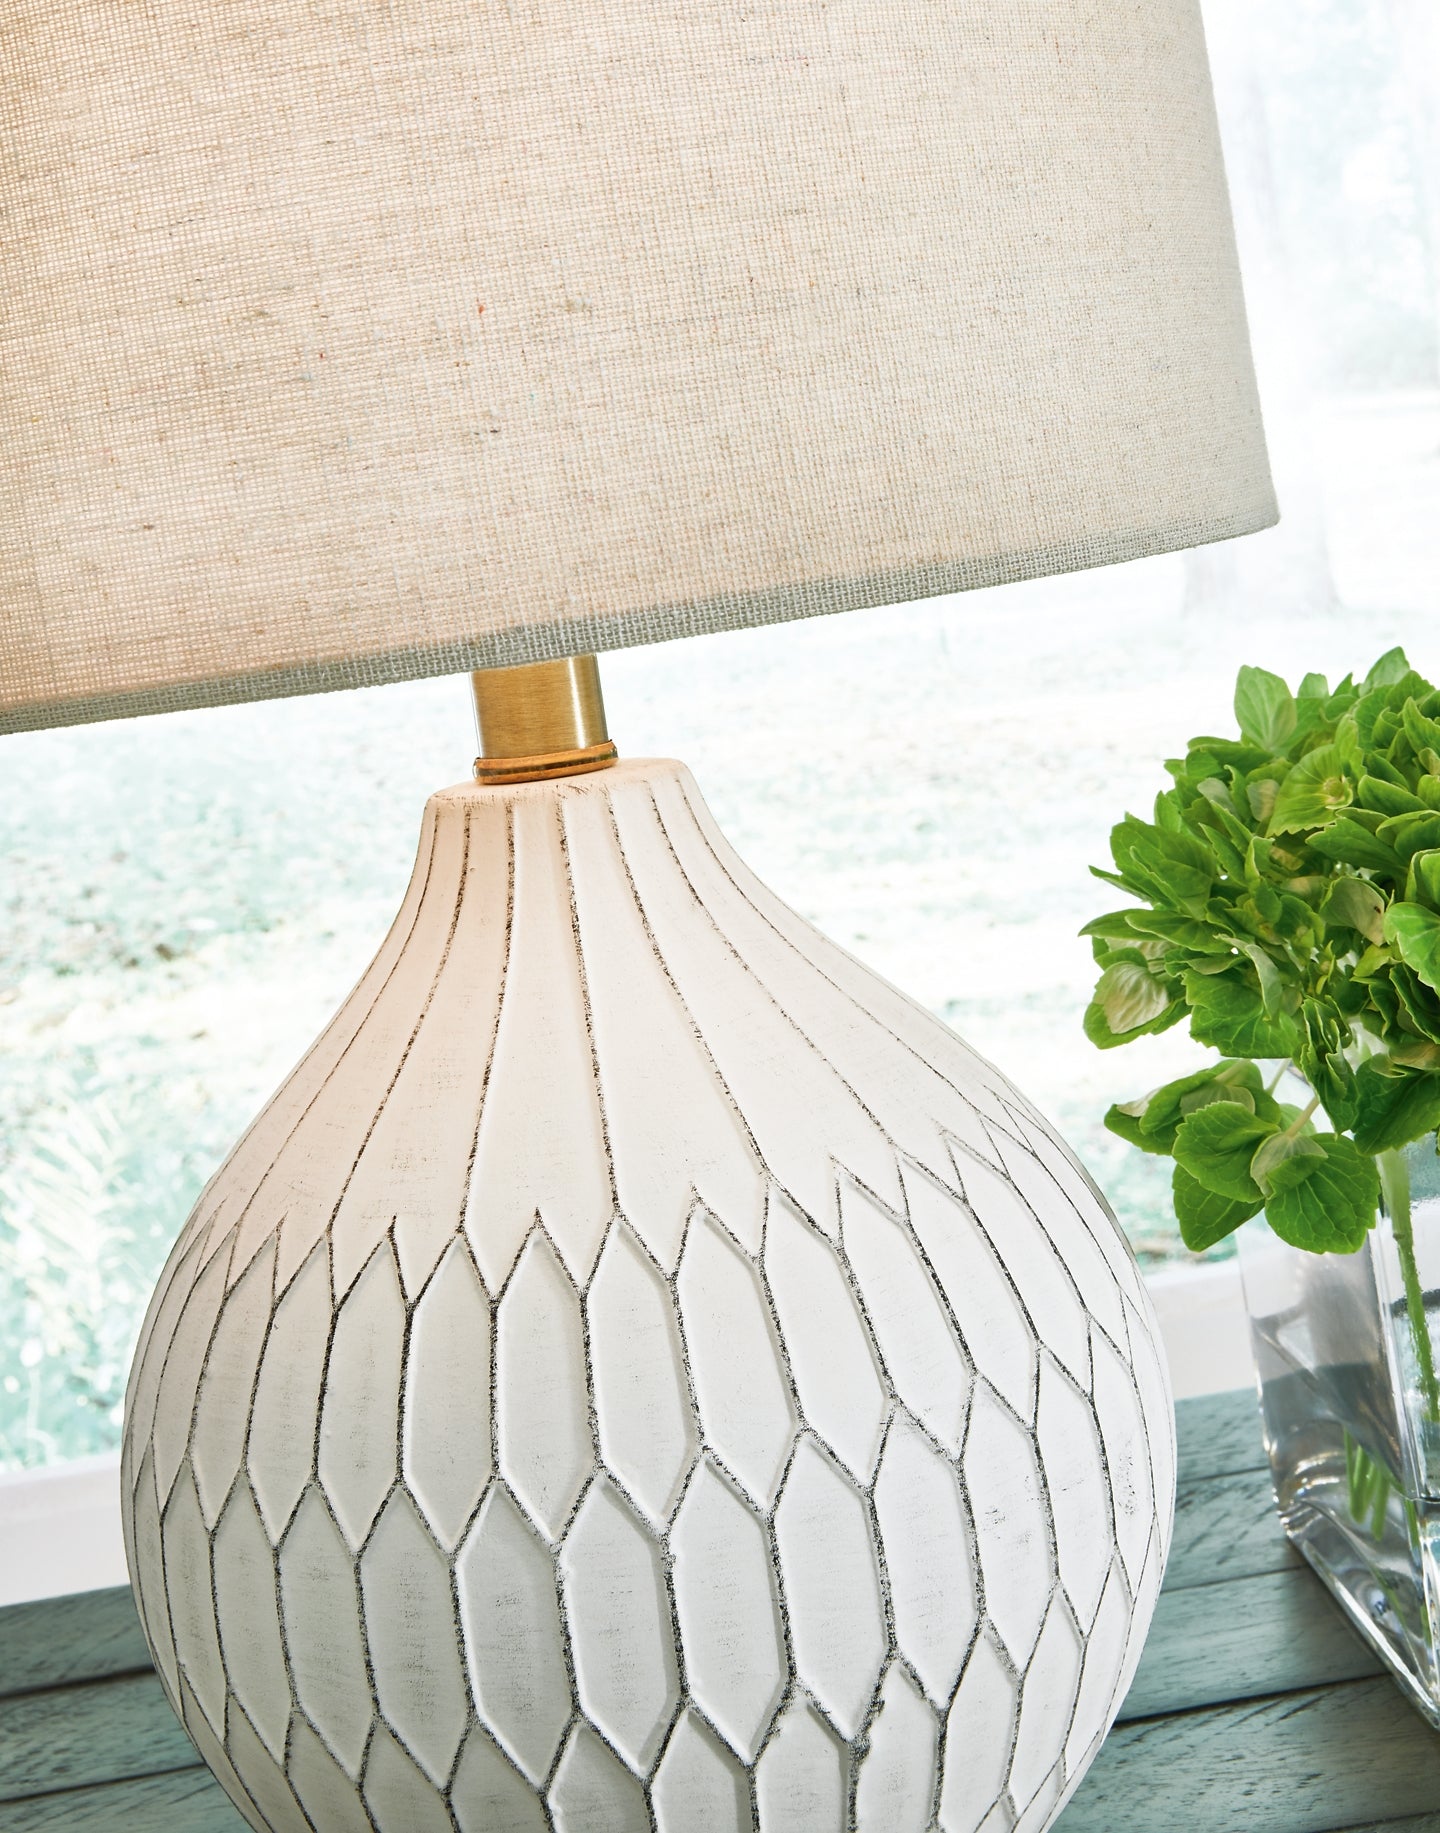 Wardmont Ceramic Table Lamp (1/CN)